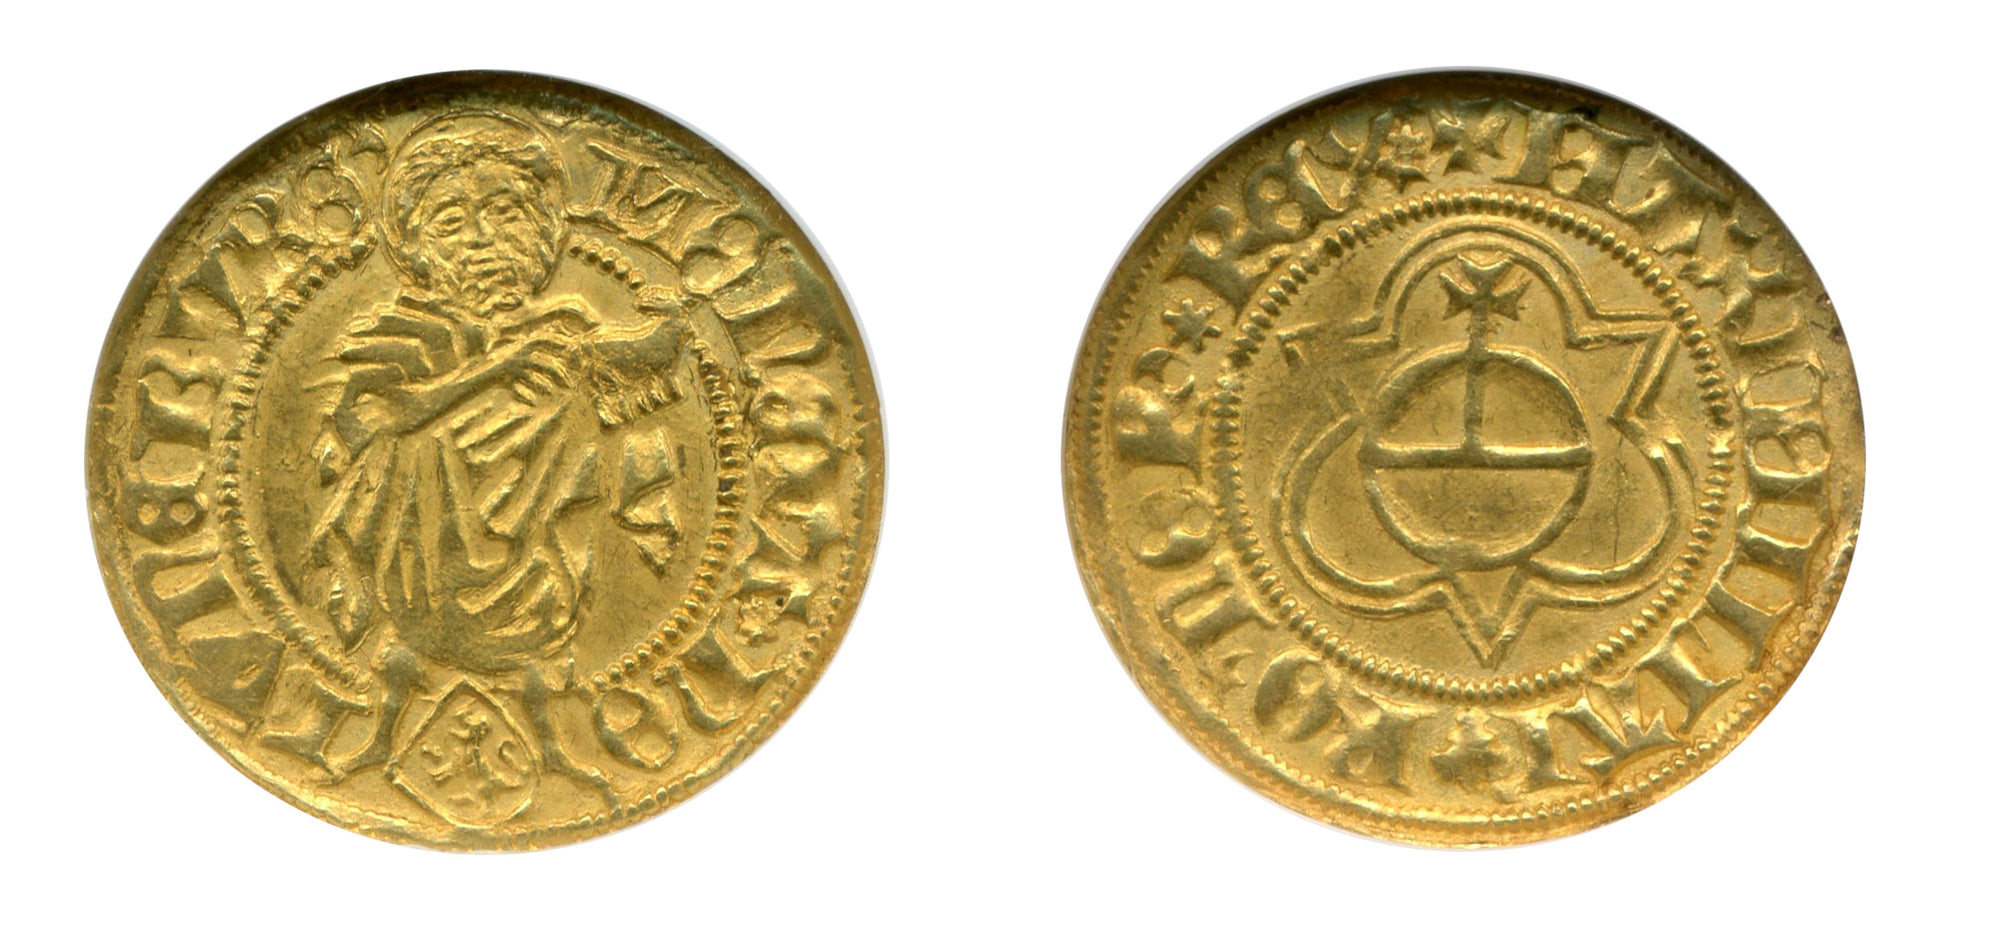 1493-1508 Luneburg Gold Gulden NGC AU 53 - Hard Asset Management, Inc